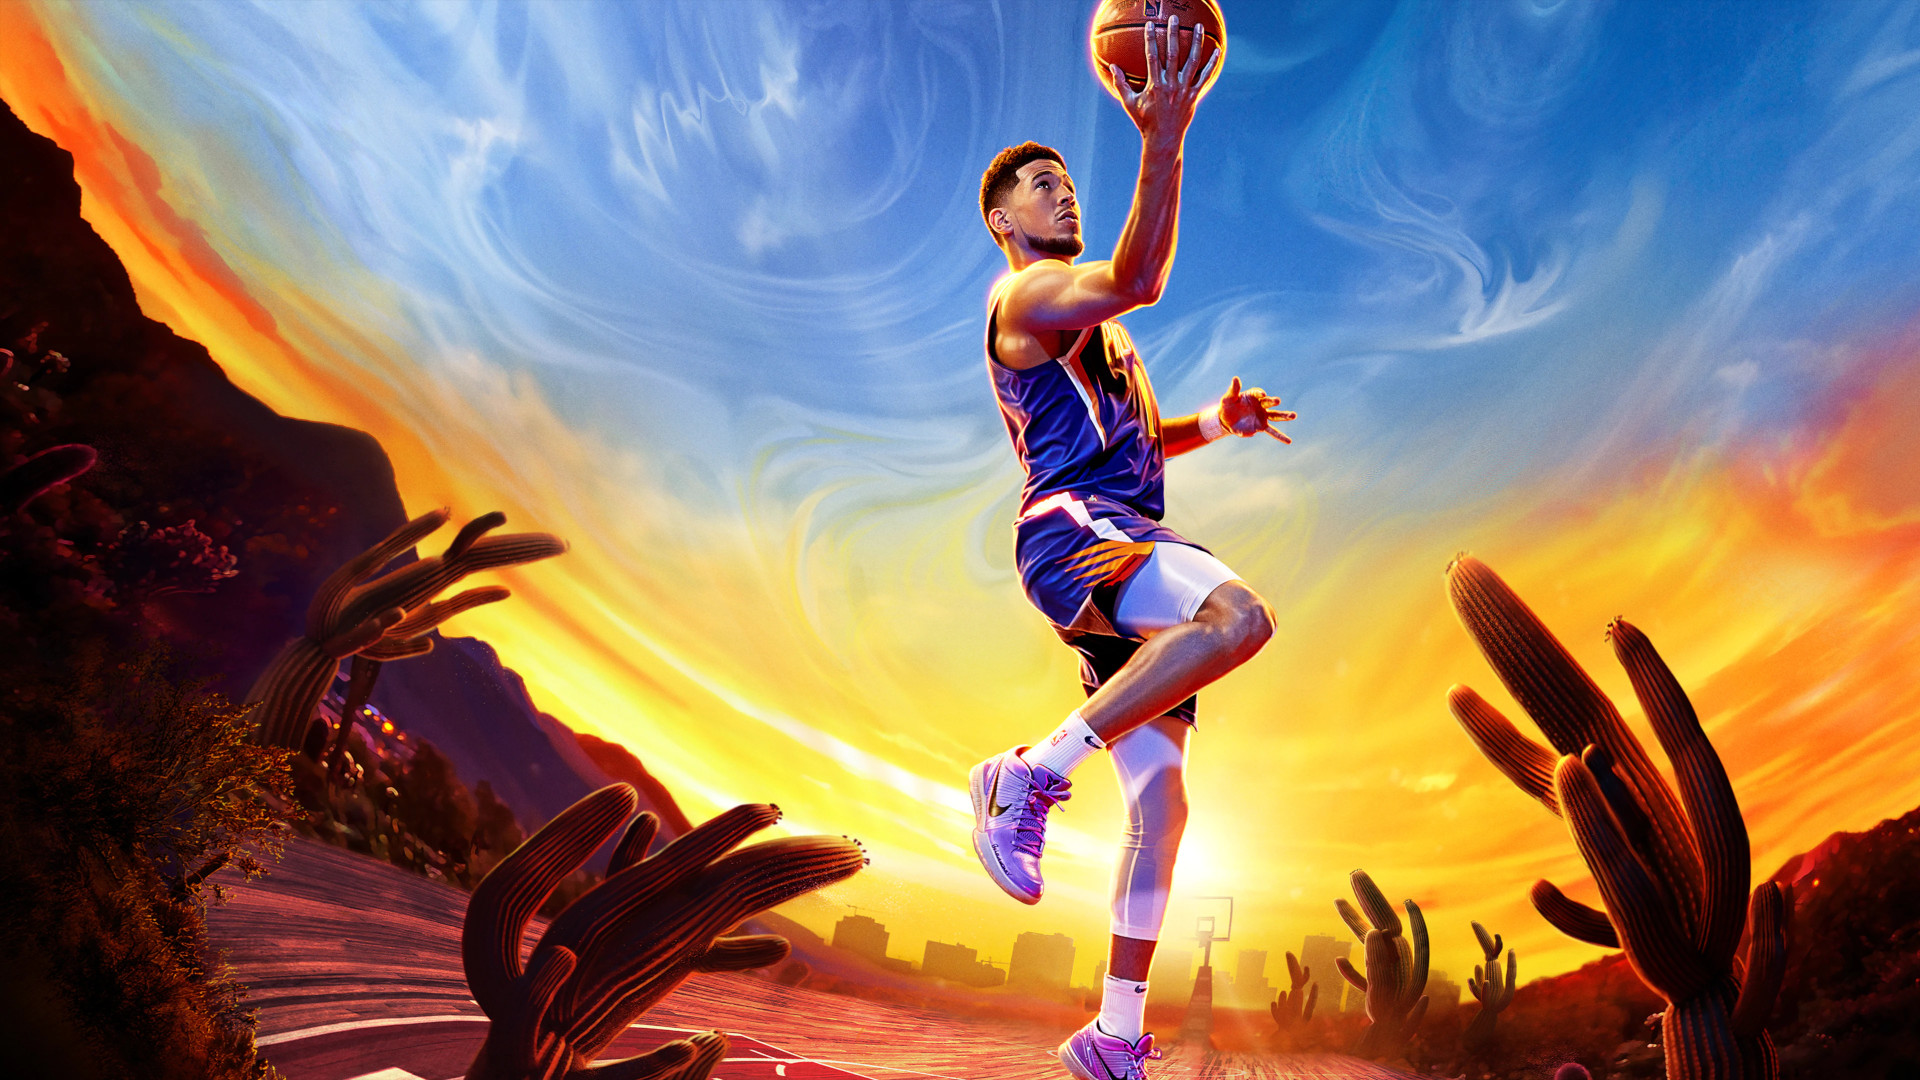 NBA 2K23 Digital Deluxe Edition AU Xbox Series X,S CD Key